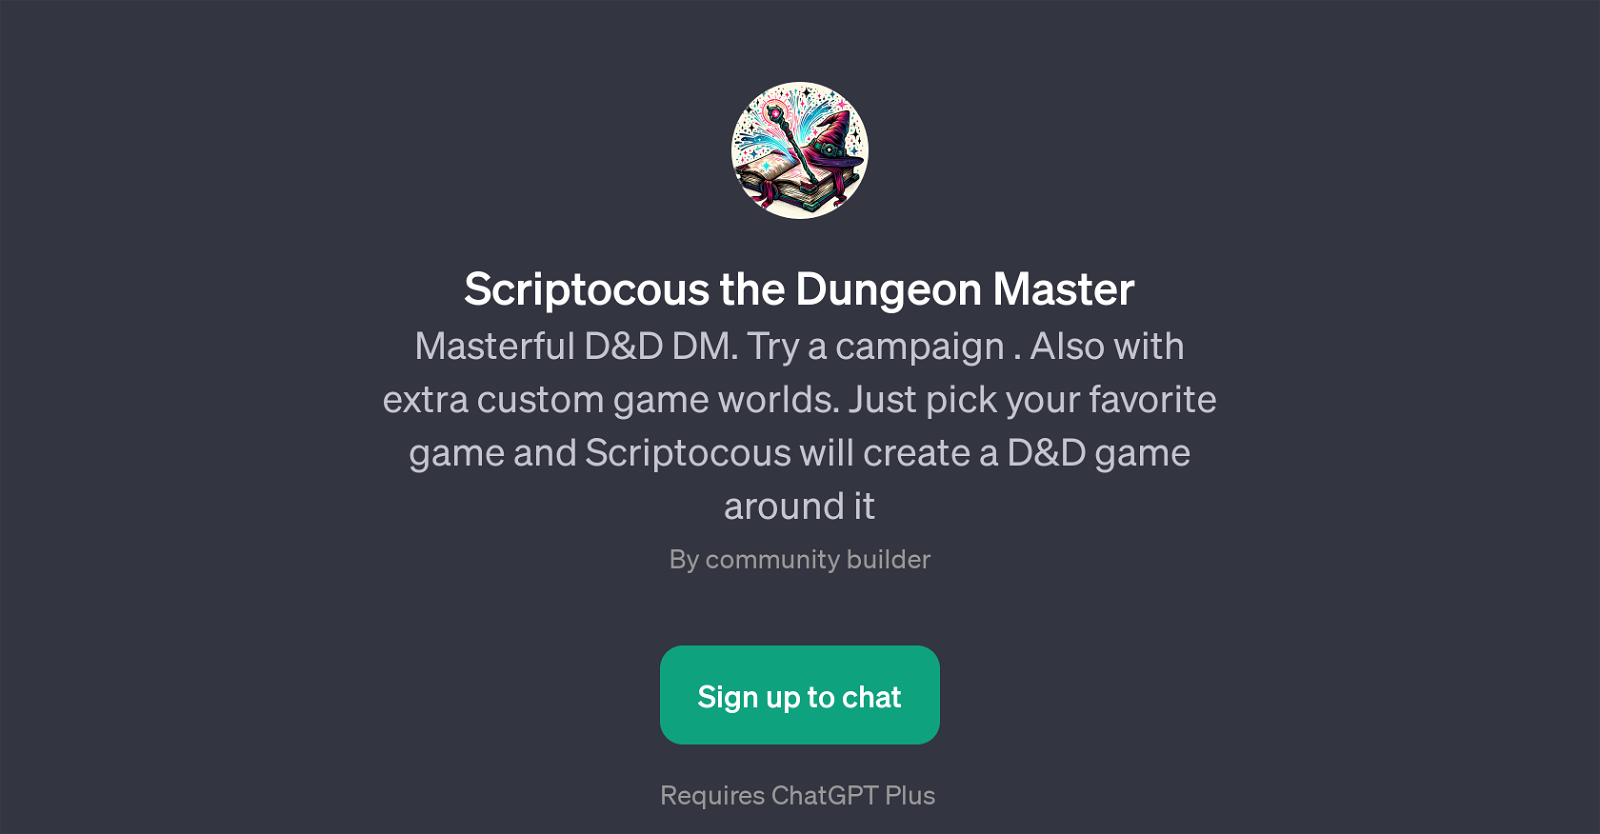 Scriptocous the Dungeon Master website